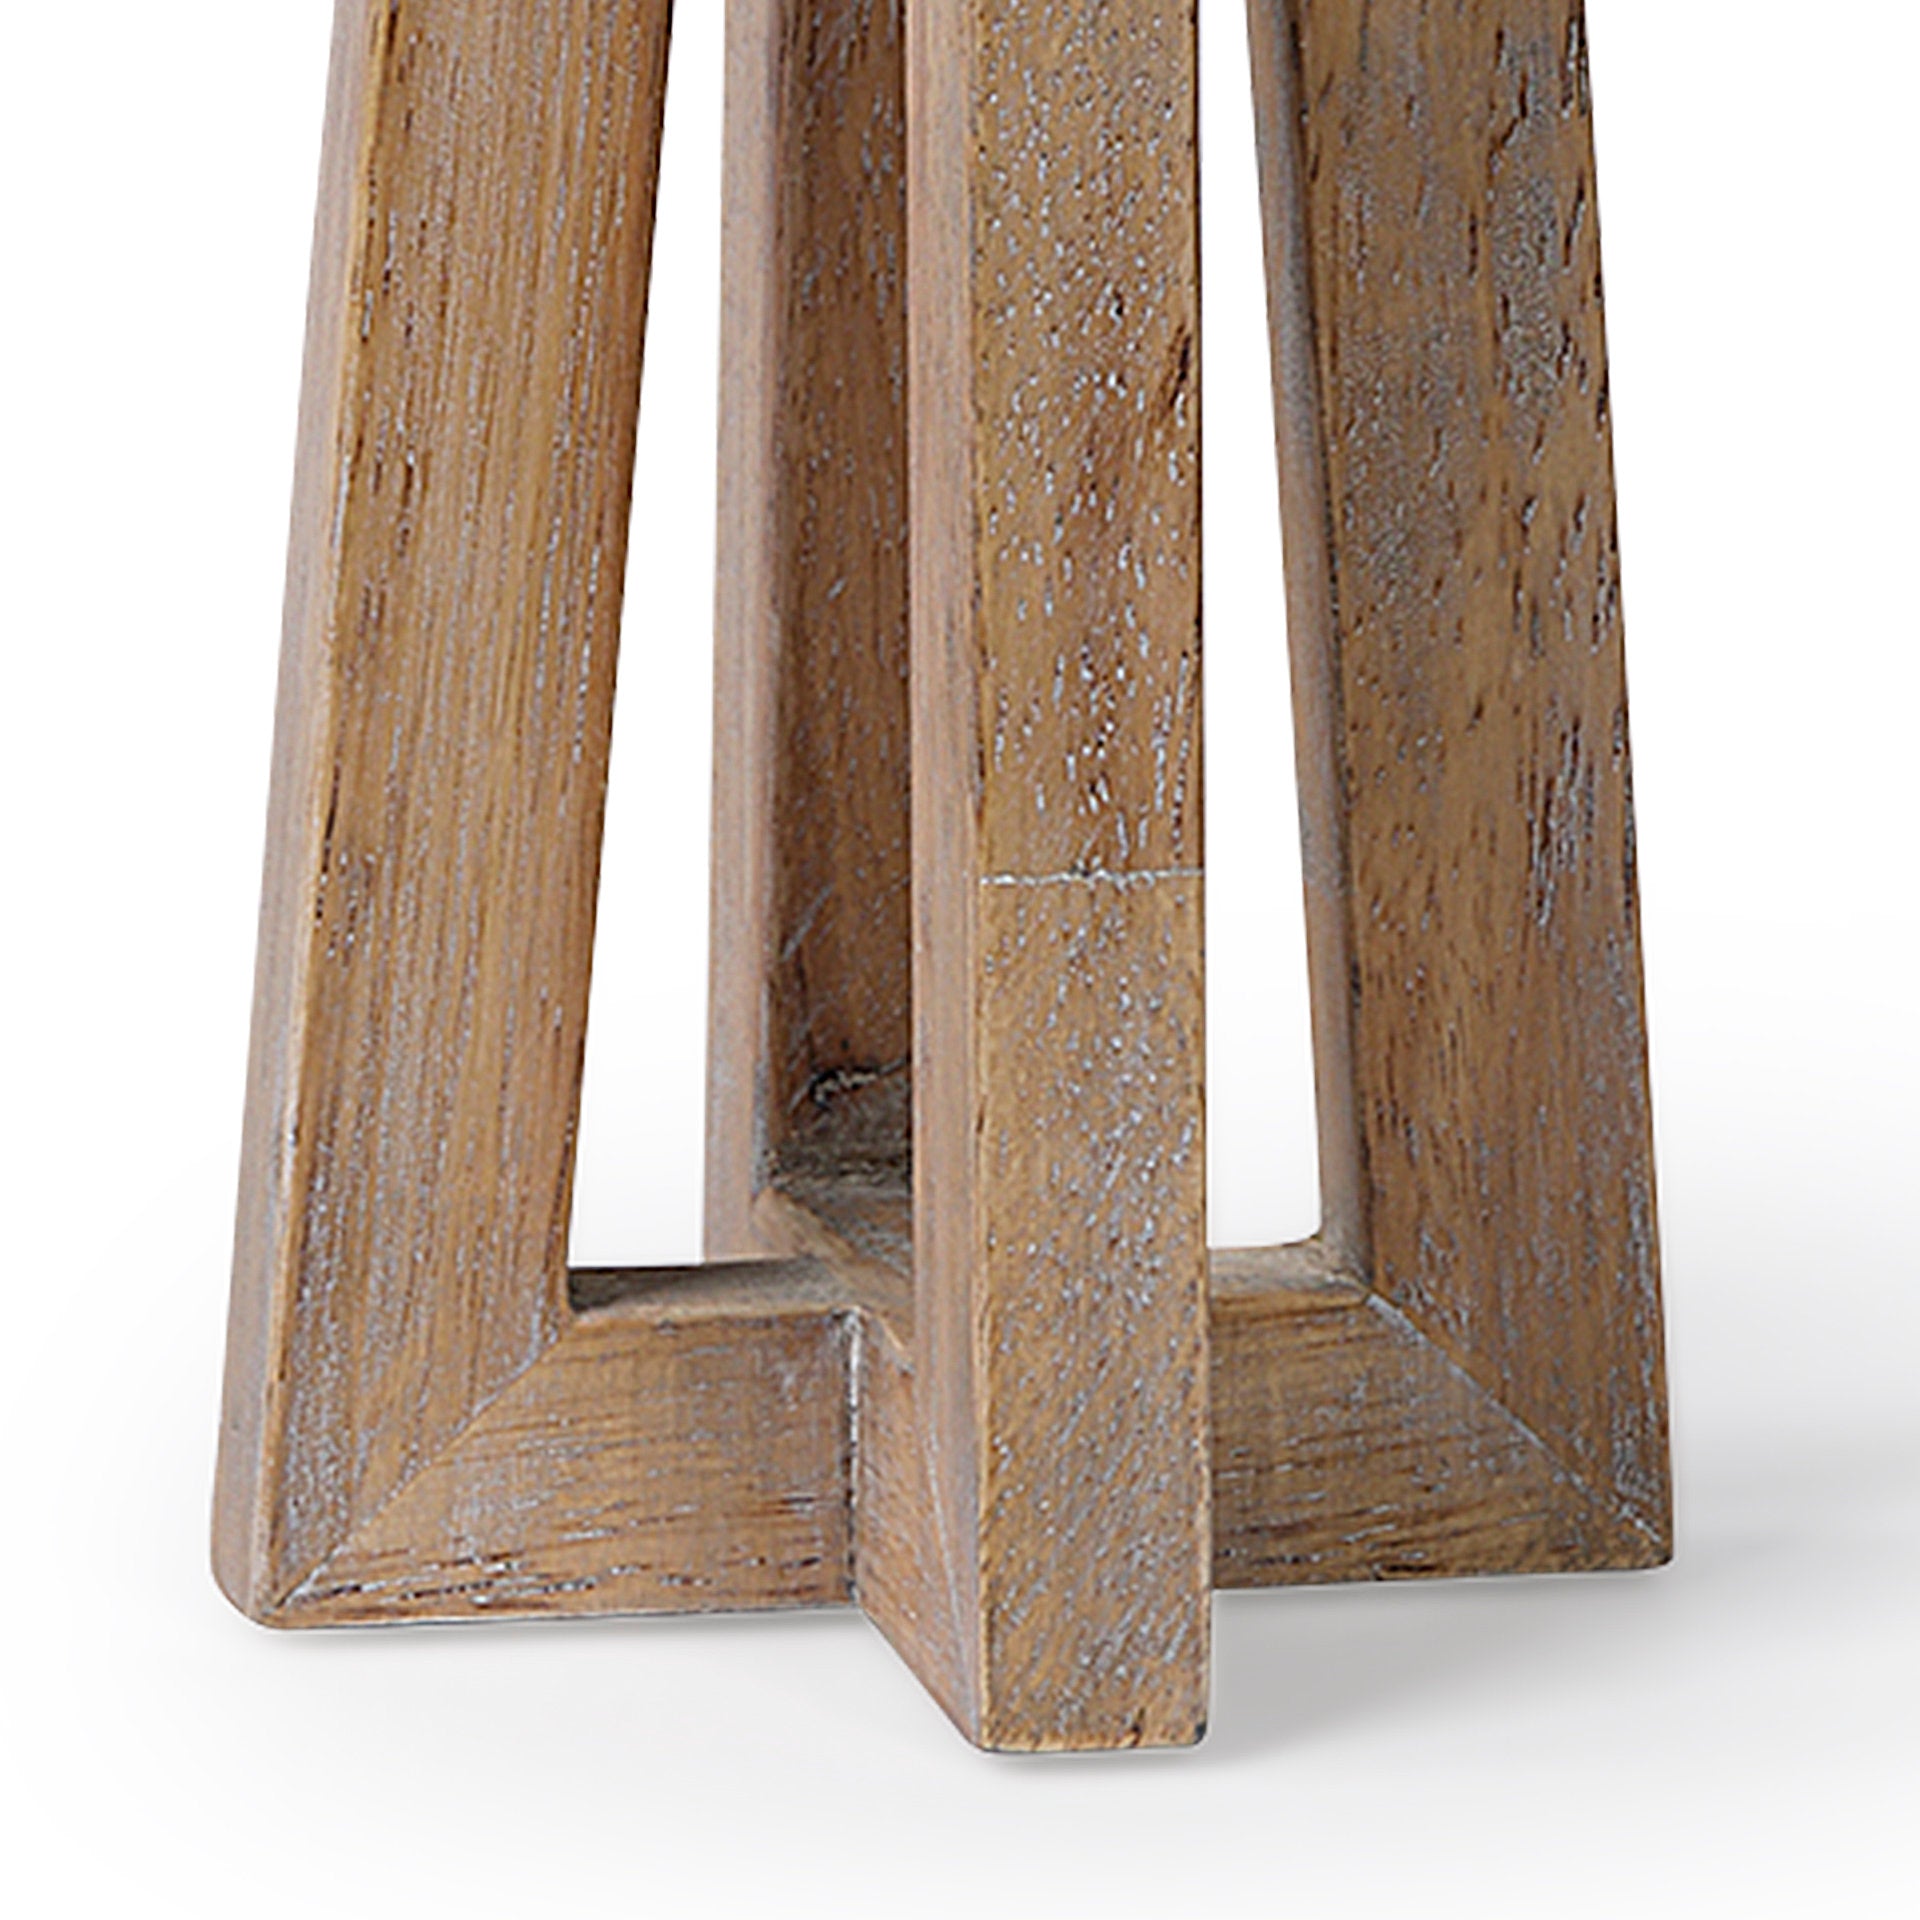 Mercana Astra Wood Pedestal Candle Holder